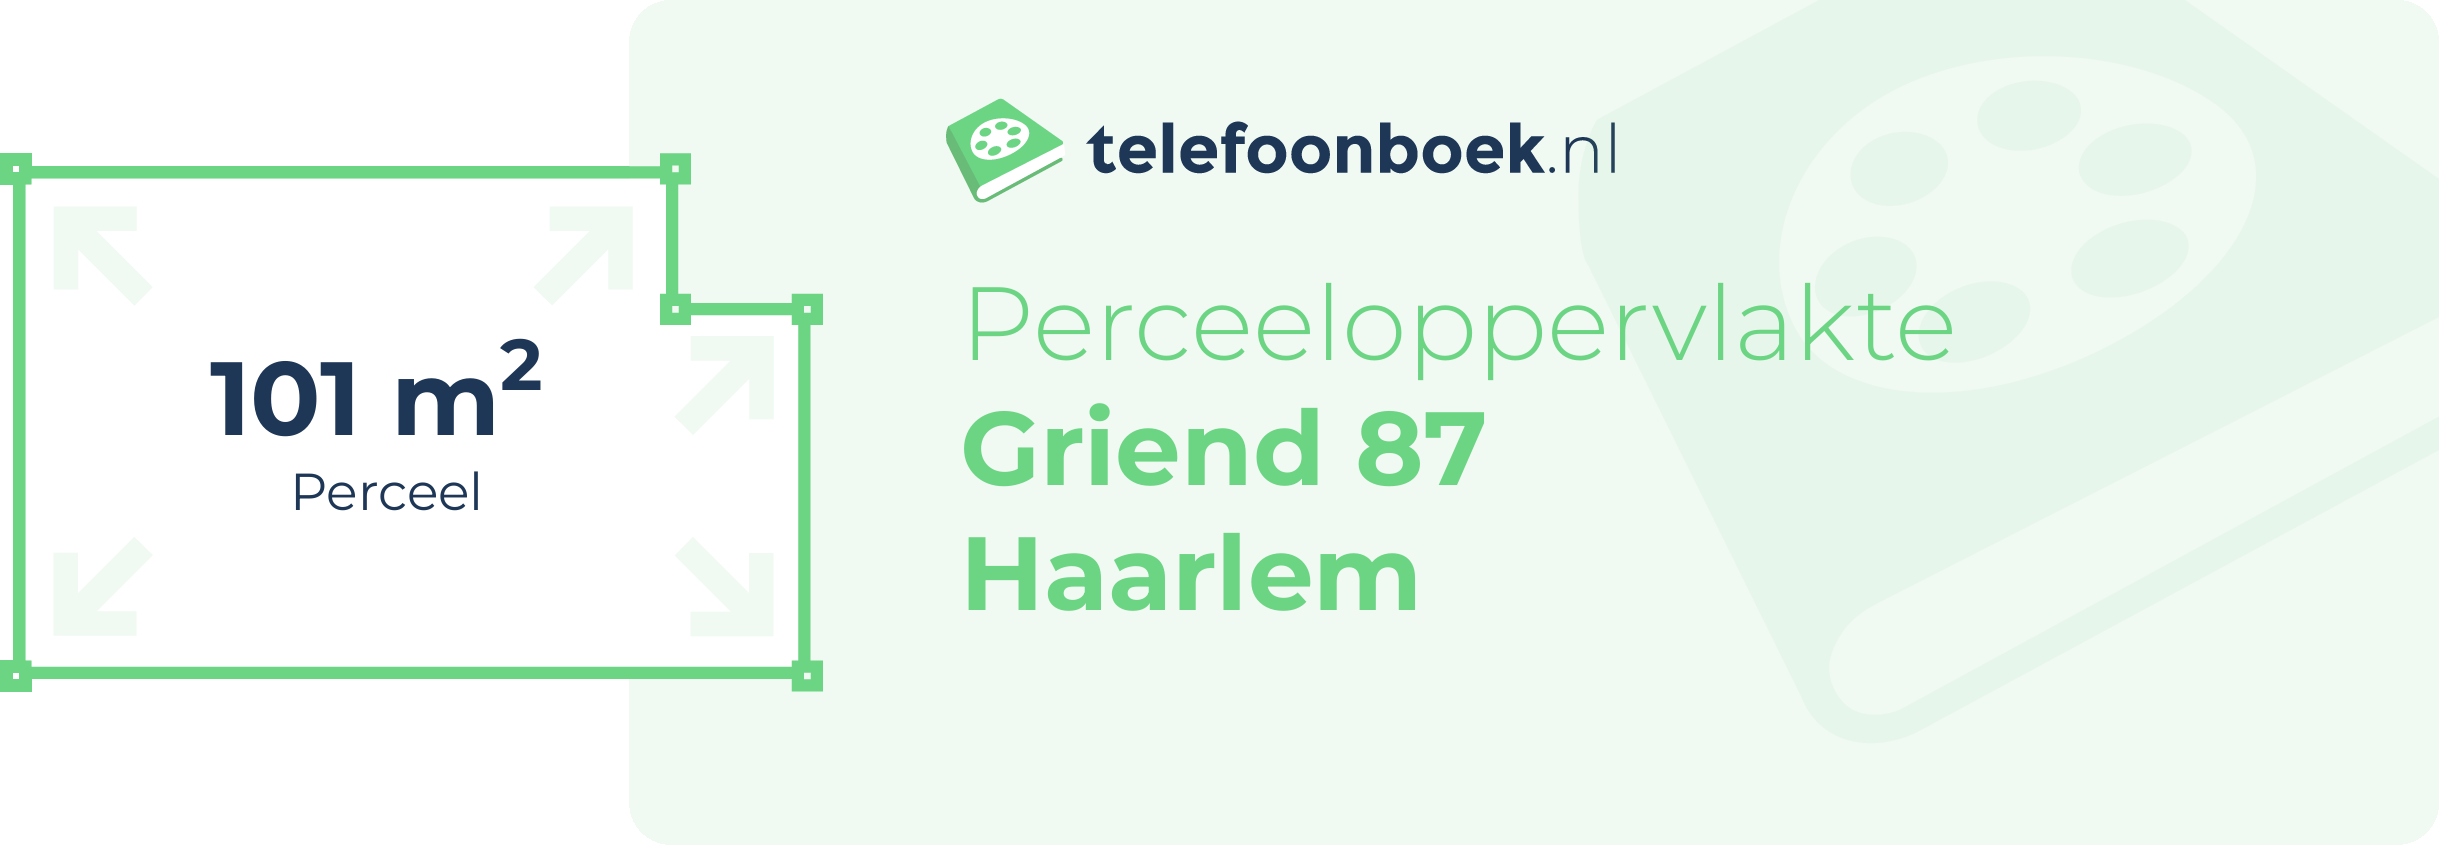 Perceeloppervlakte Griend 87 Haarlem